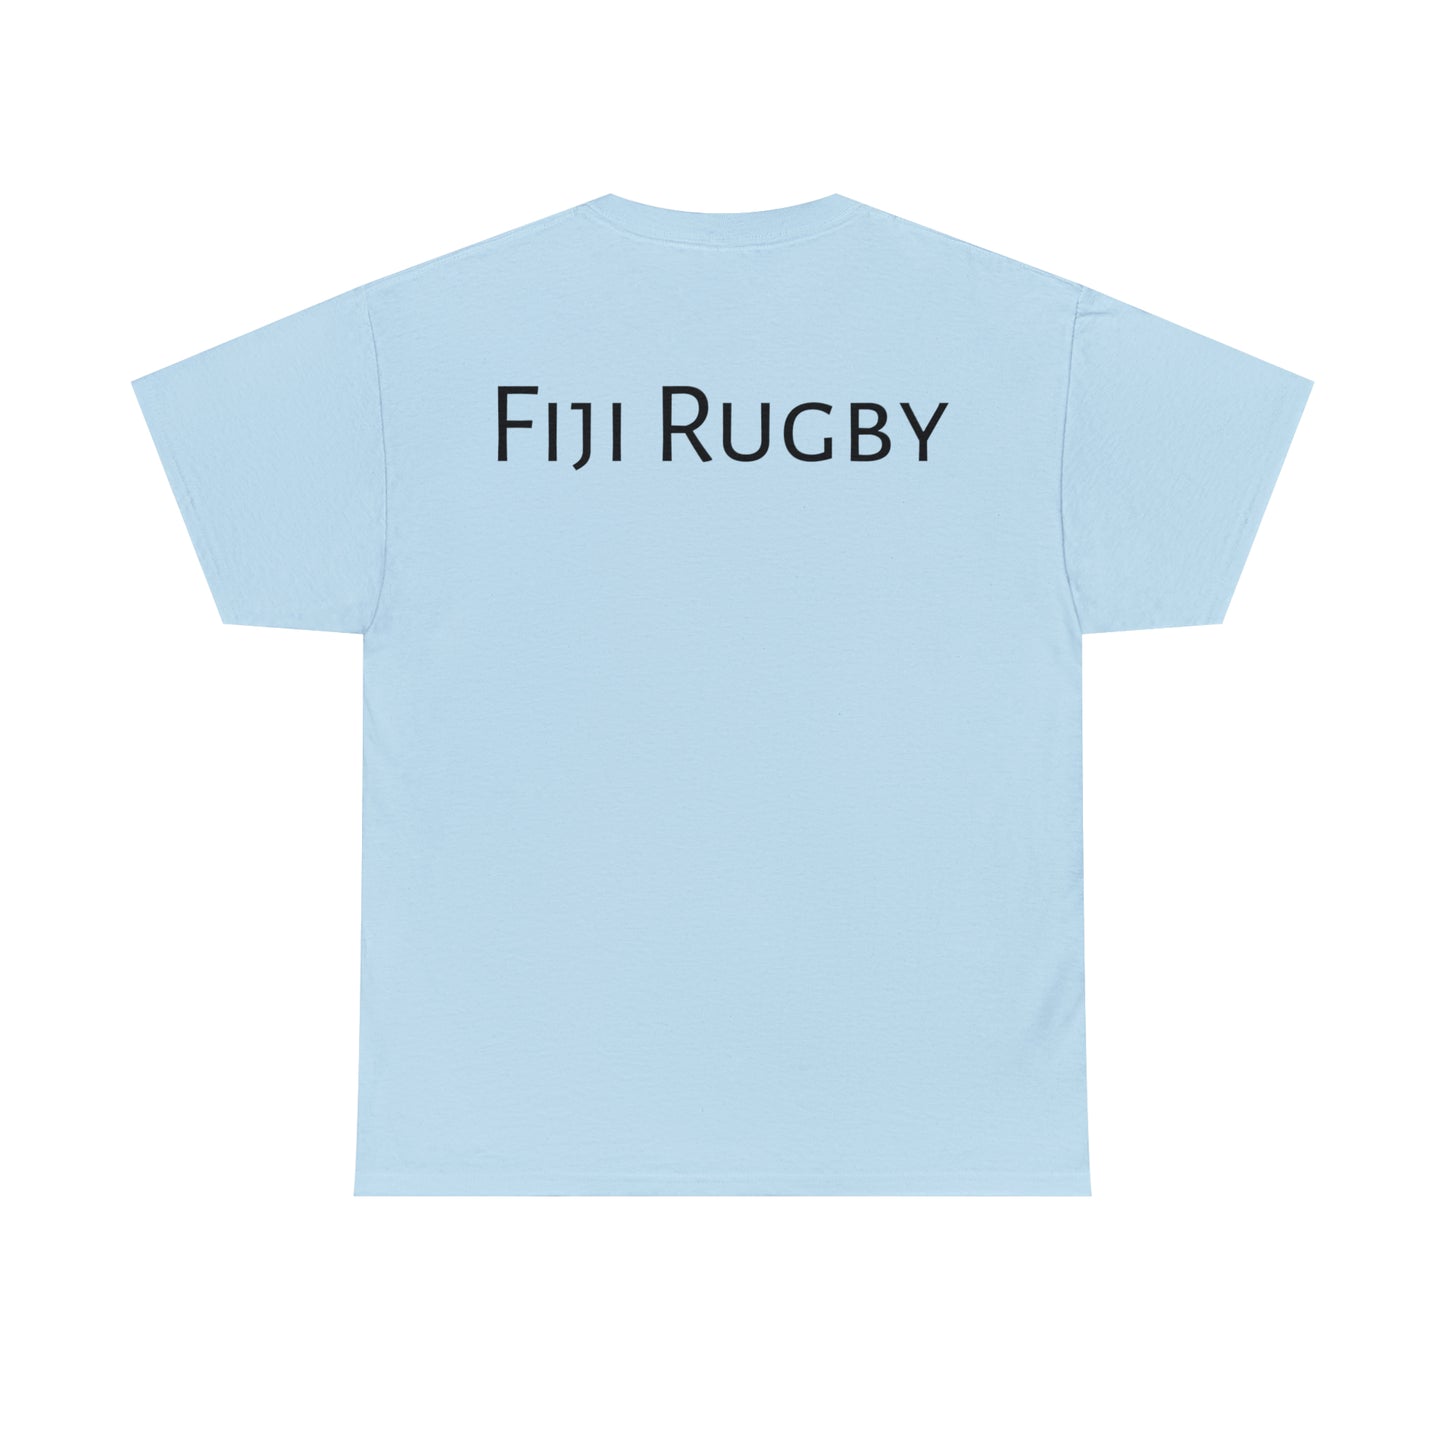 Celebrating Fiji - light shirts